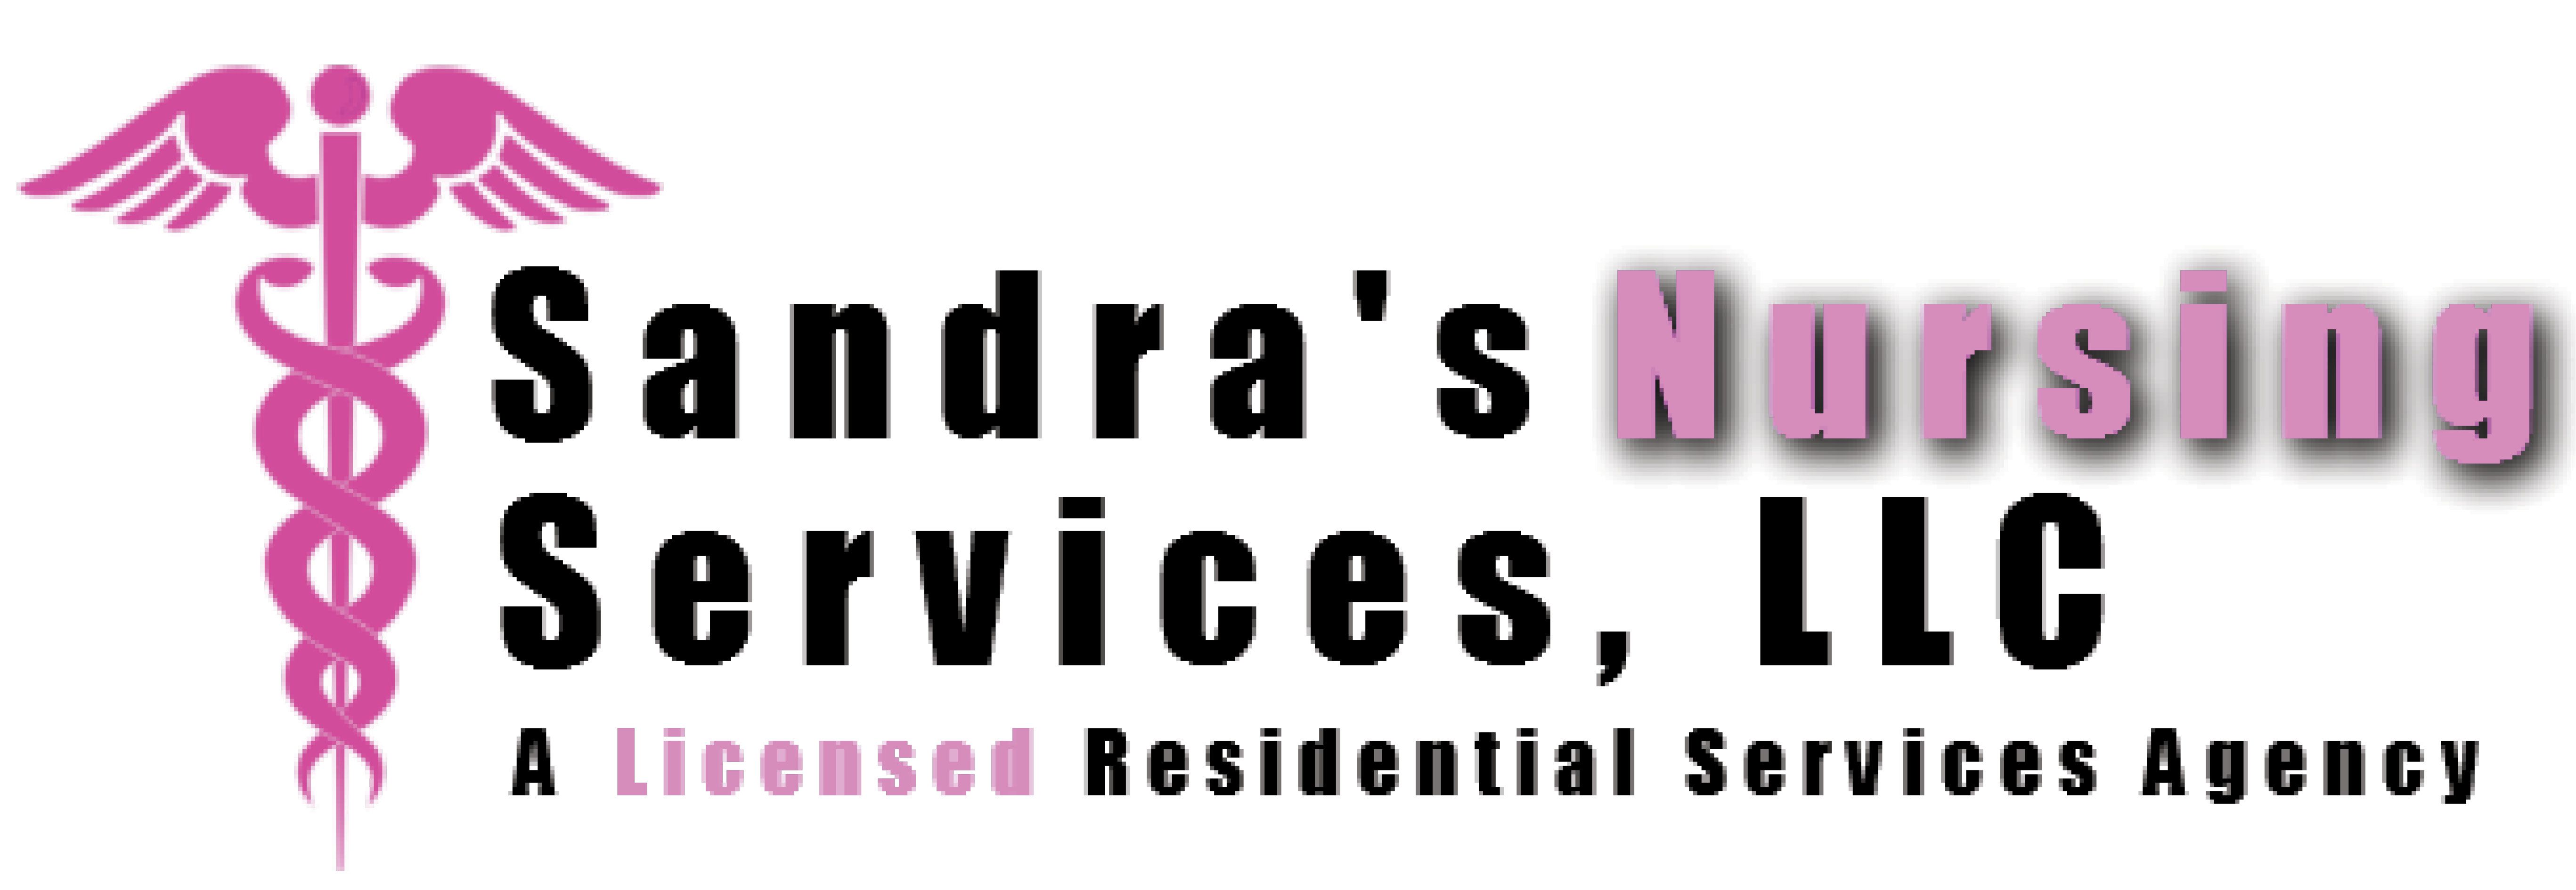 Sandra's Nursing Services